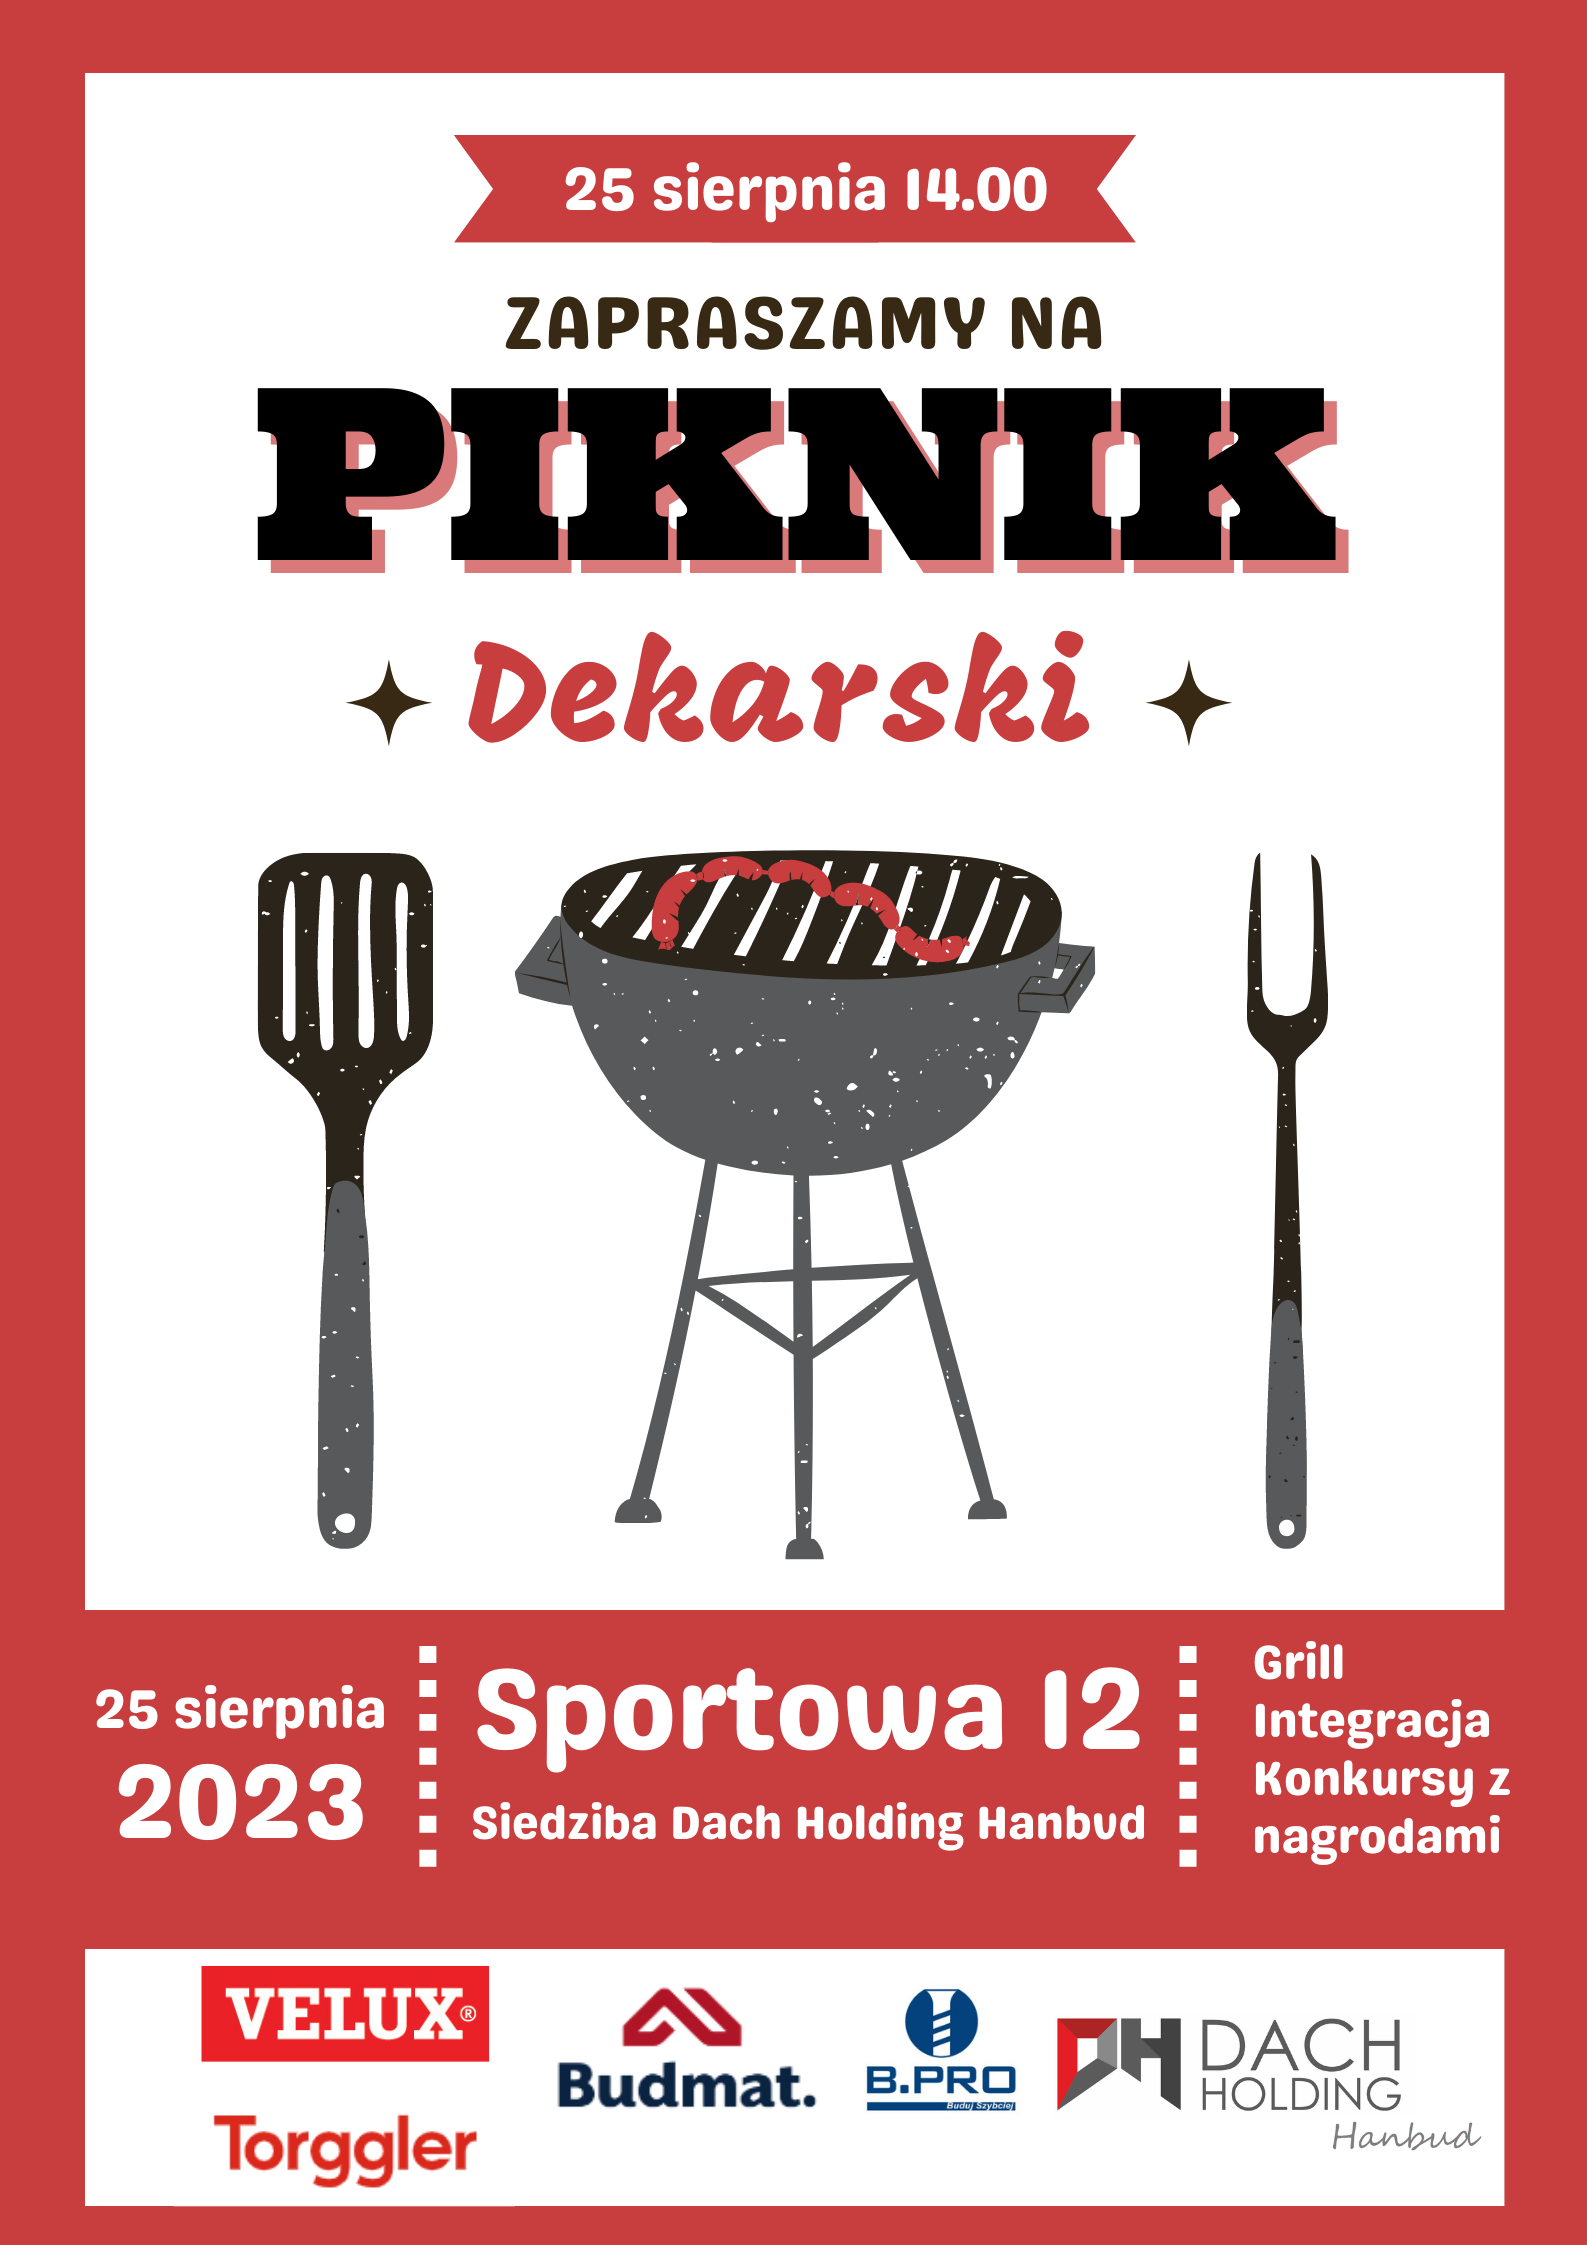 Piknik dekarski 2023 - logo